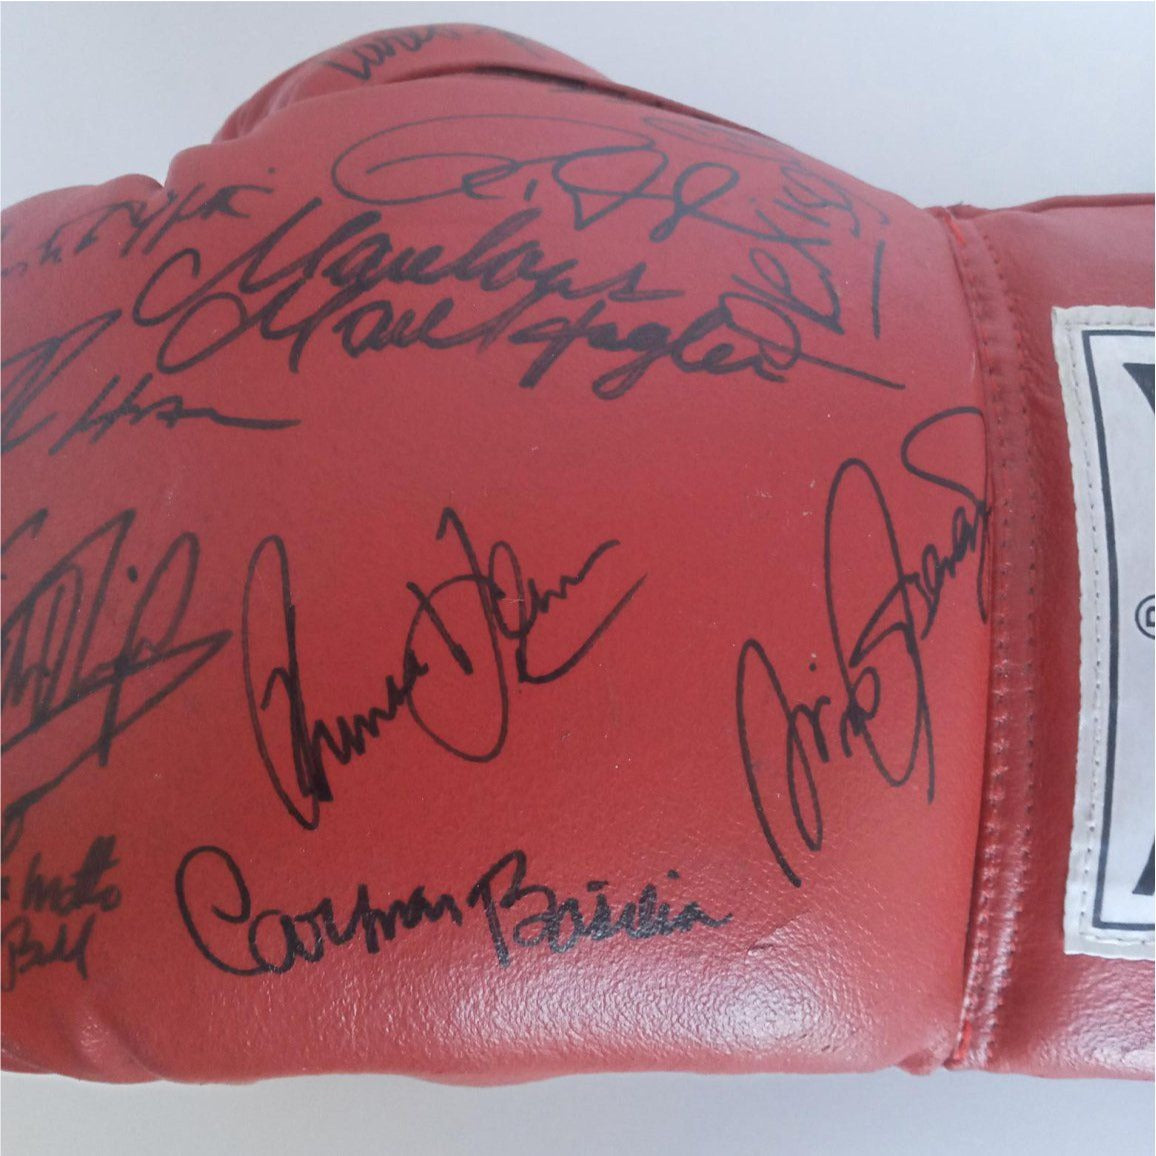 Jake LaMotta Marvin Hagler Carmen Basilio boxing Legend signed glove with proof